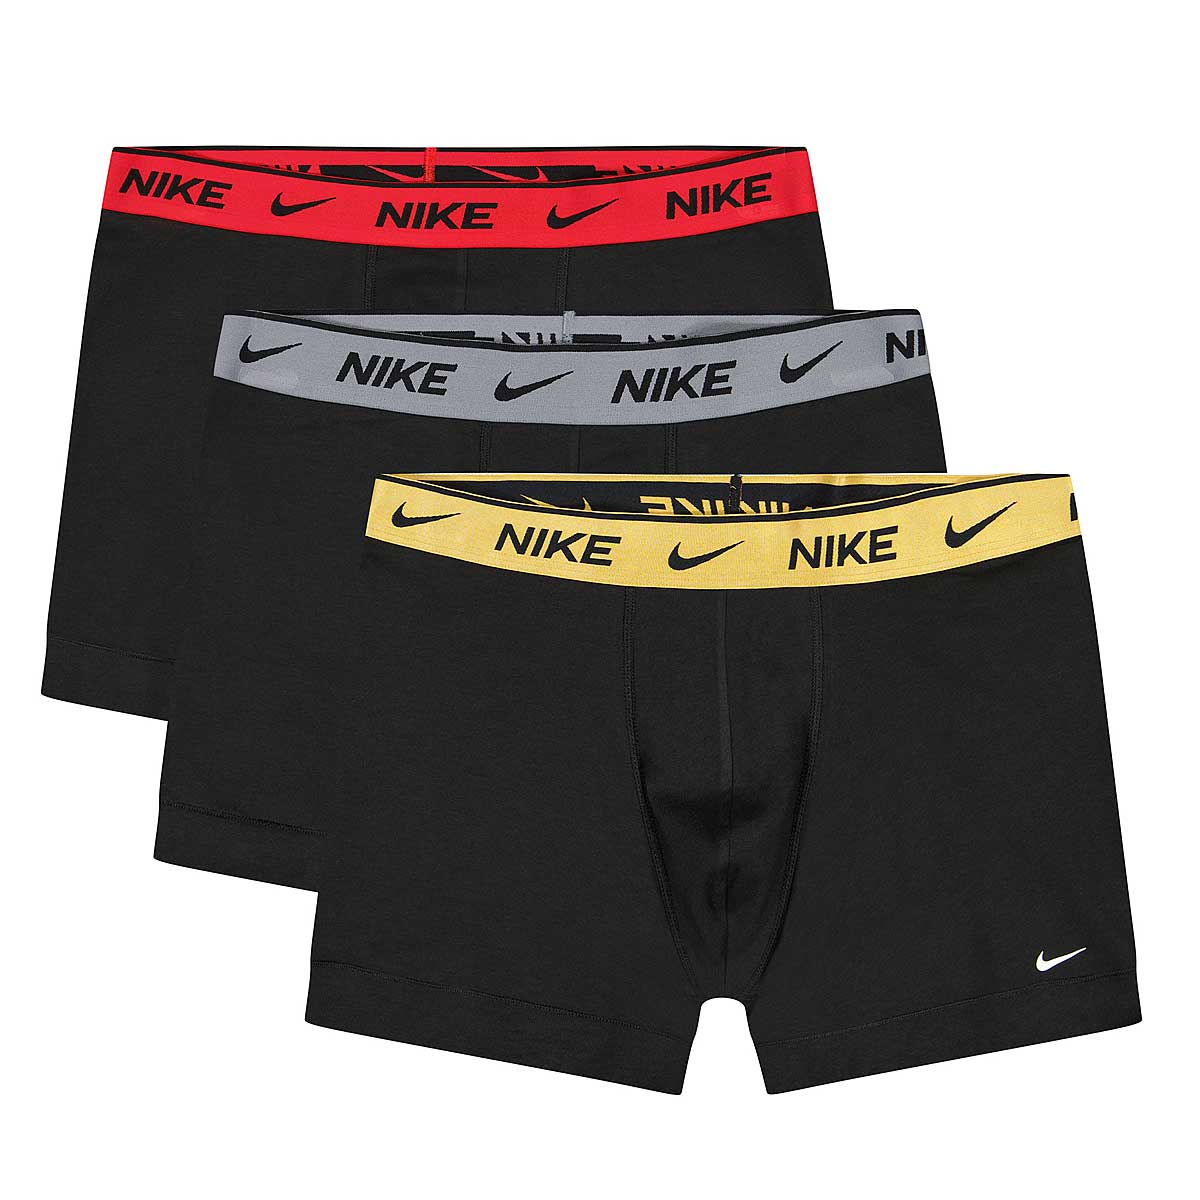 Nike Eday Cotton Stretch Boxer Briefs, Blk/Gold Wb/Silver Wb/Rose Gold Wb